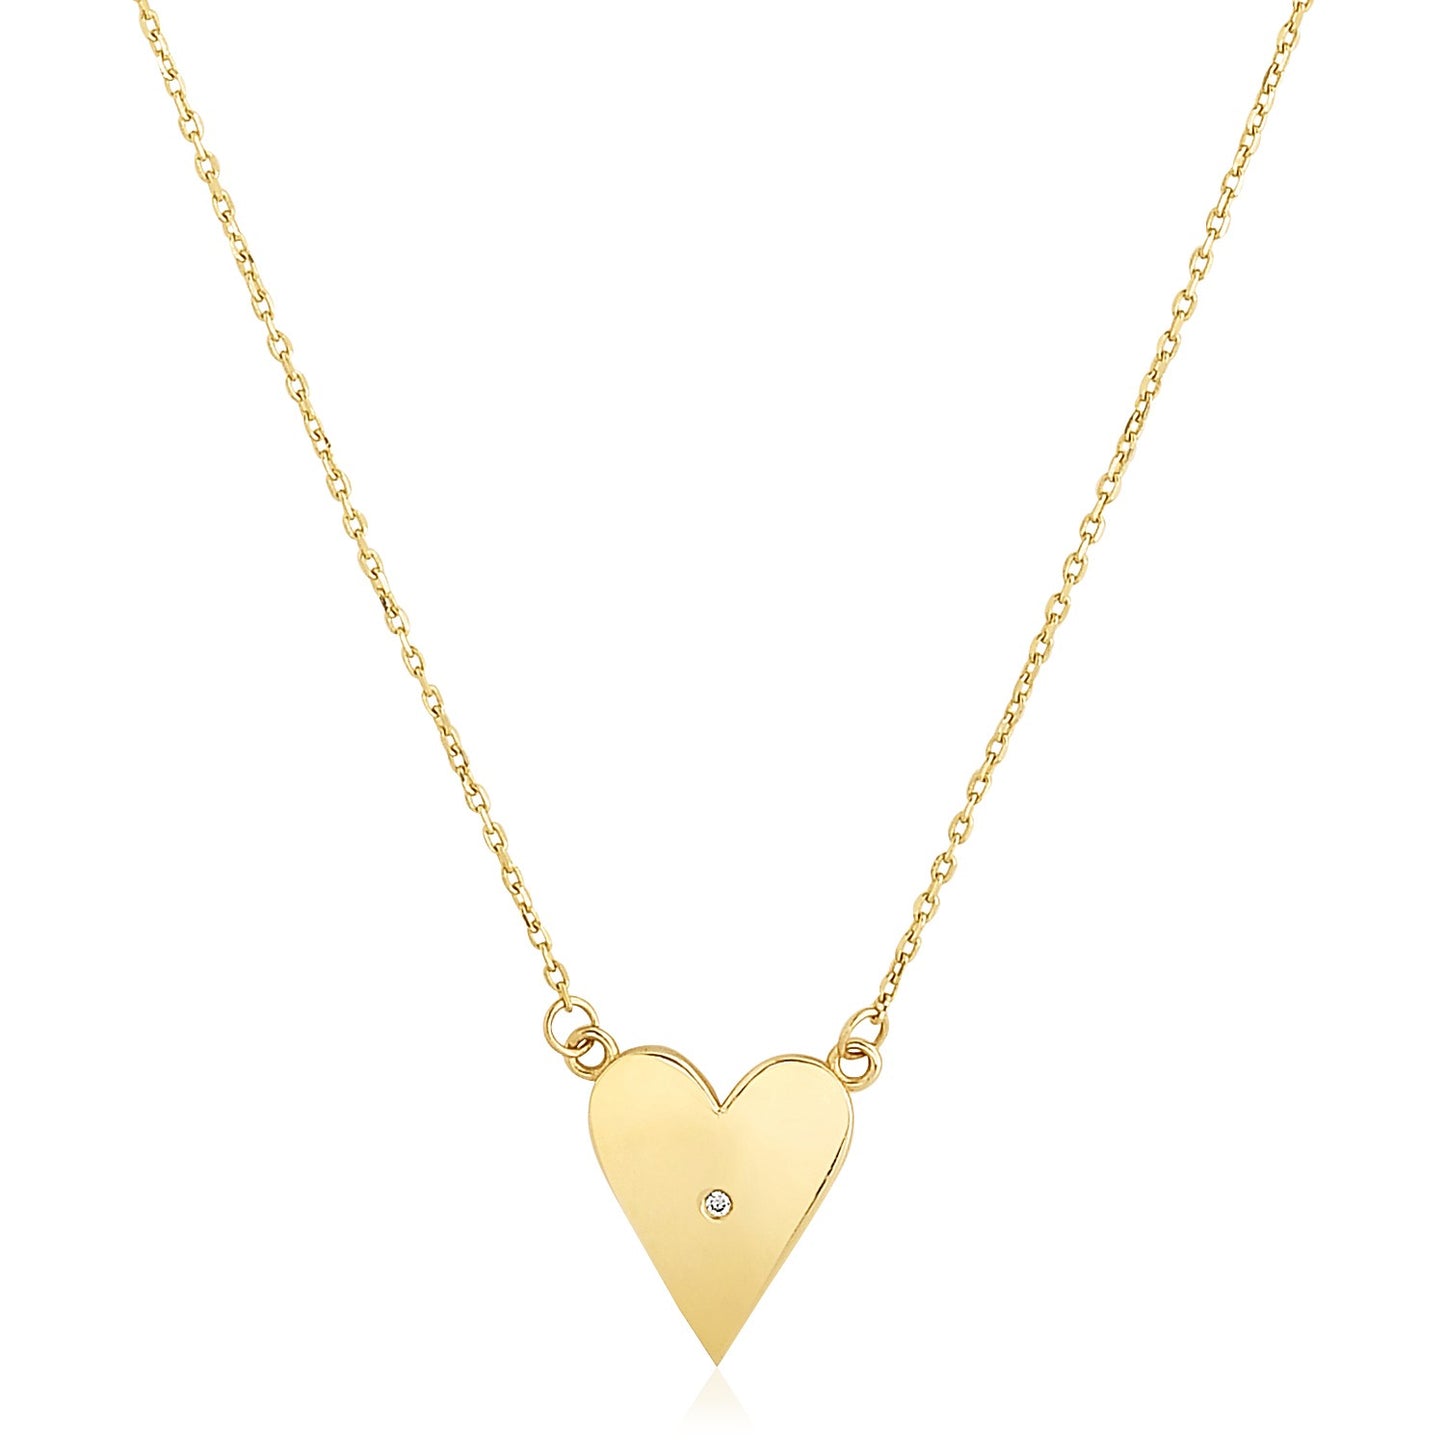 14k Yellow Gold High Polish Elongated Heart Necklace